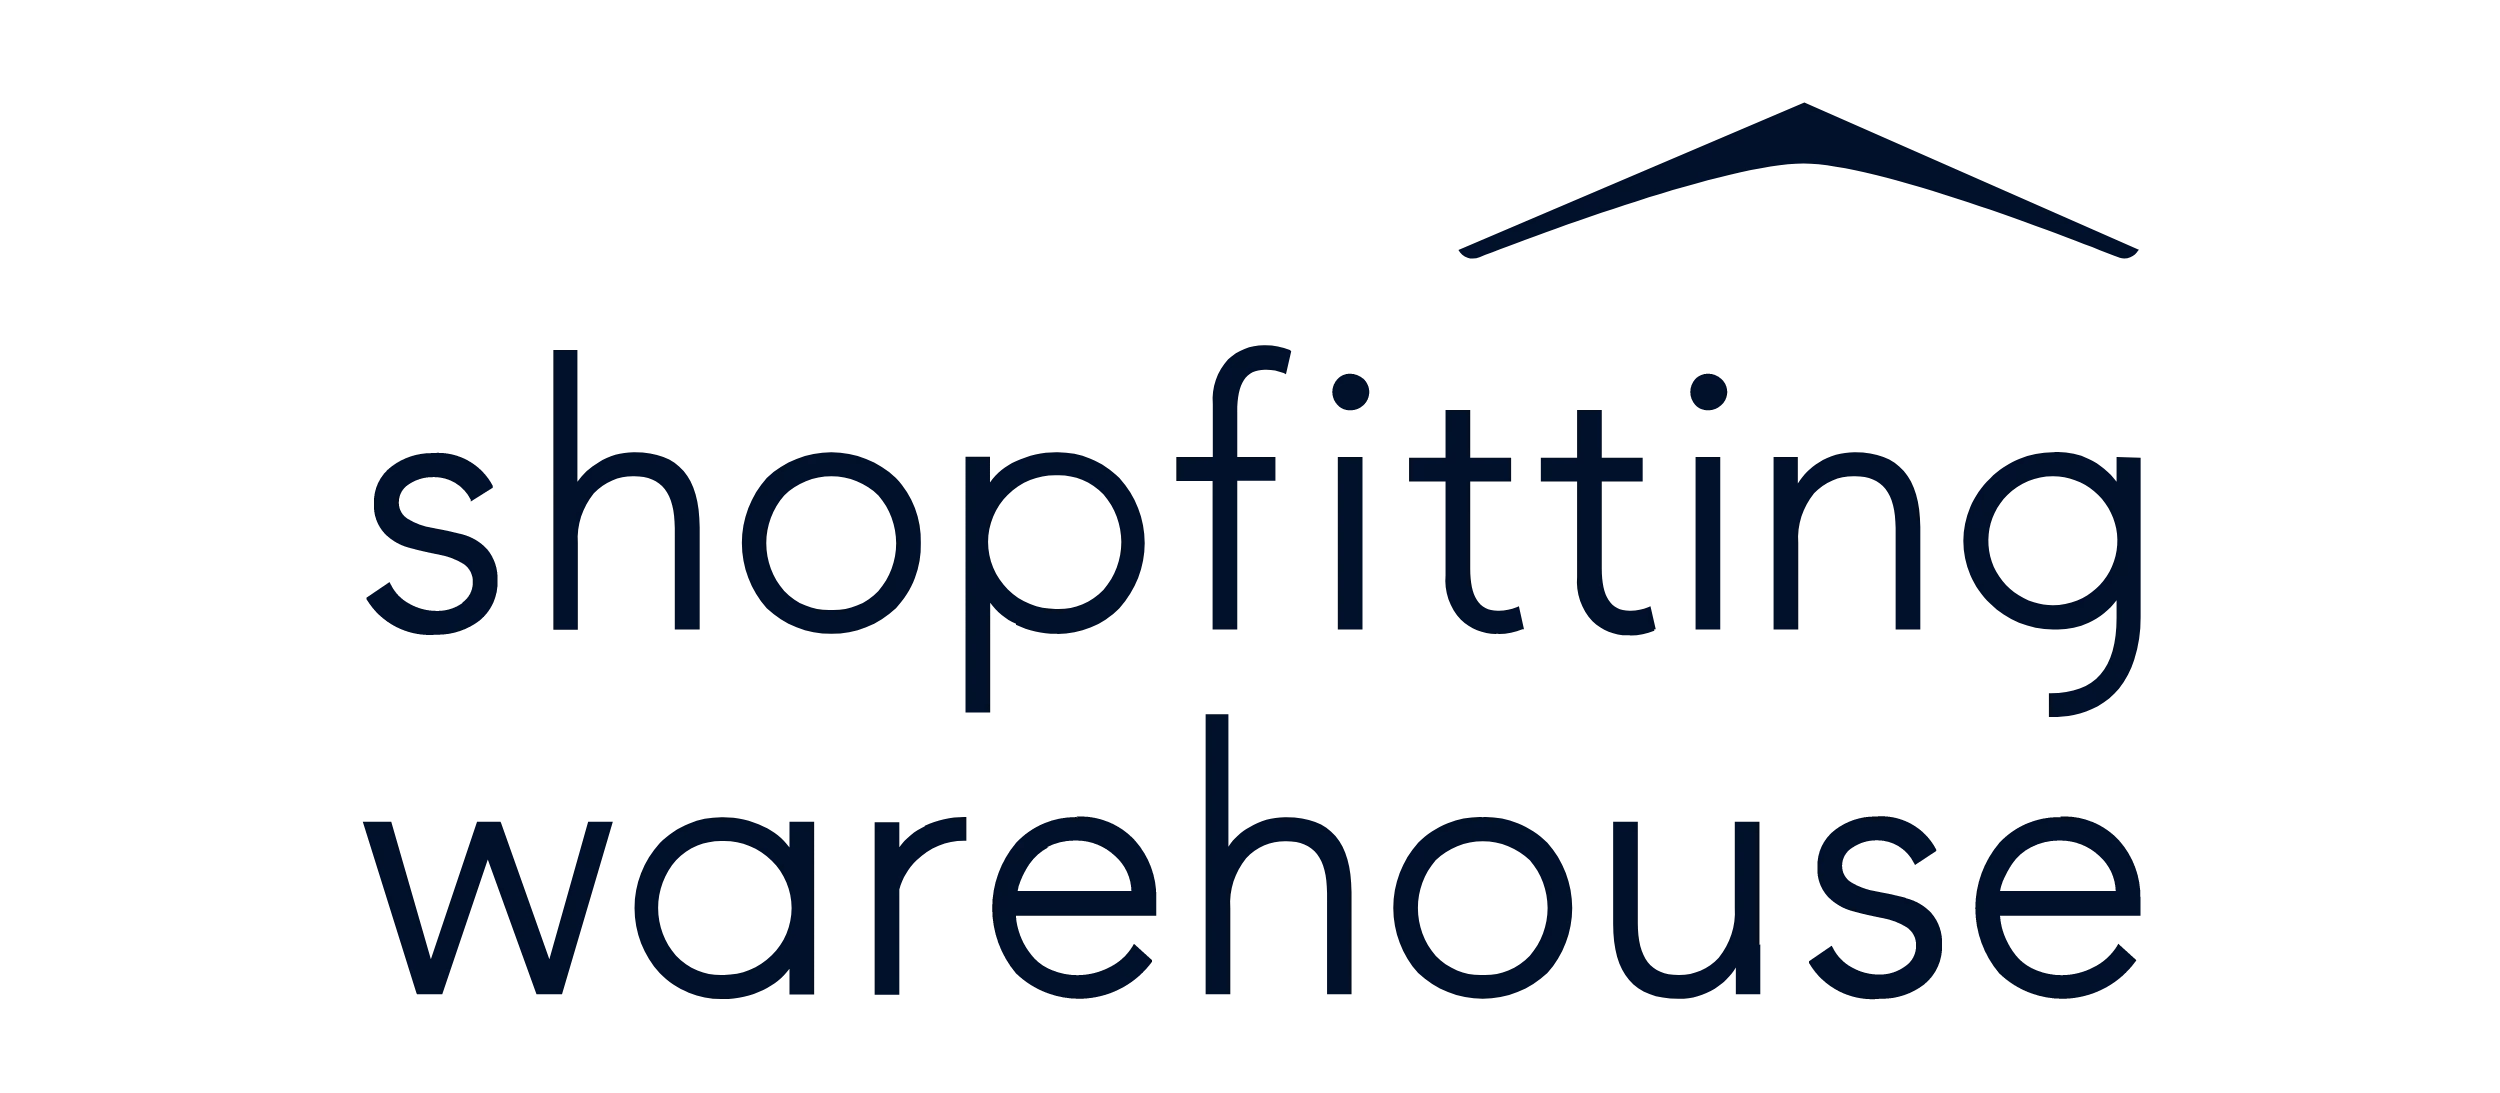 Shopfitting Warehouse logo